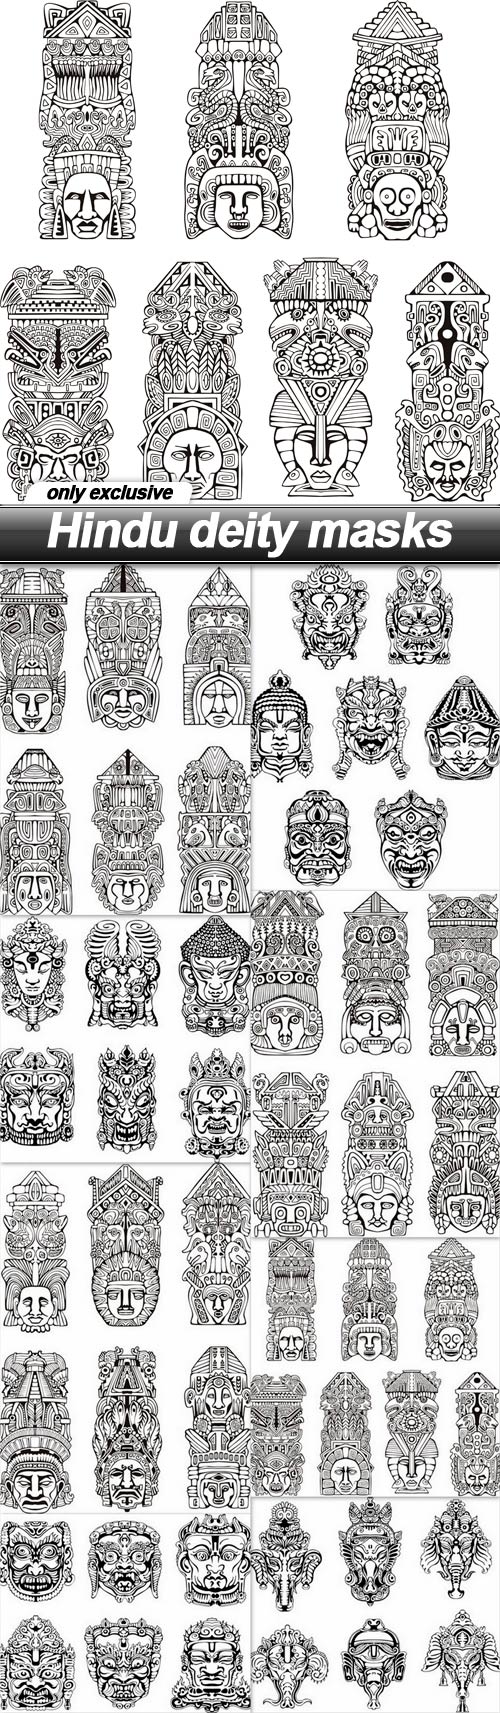 Hindu deity masks - 8 EPS